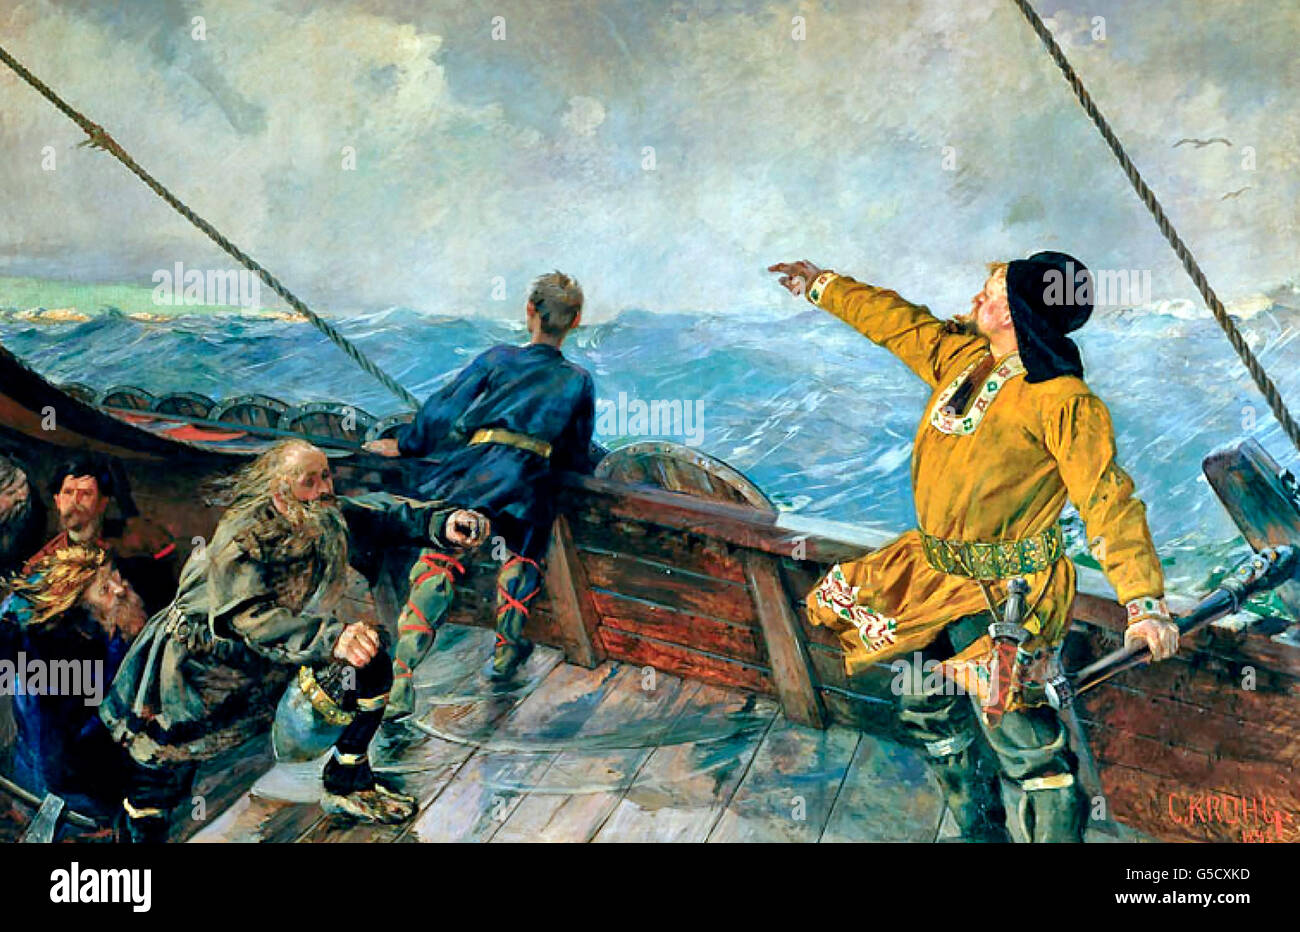 Leif Erikson discovers North America - Christian Krohg Stock Photo